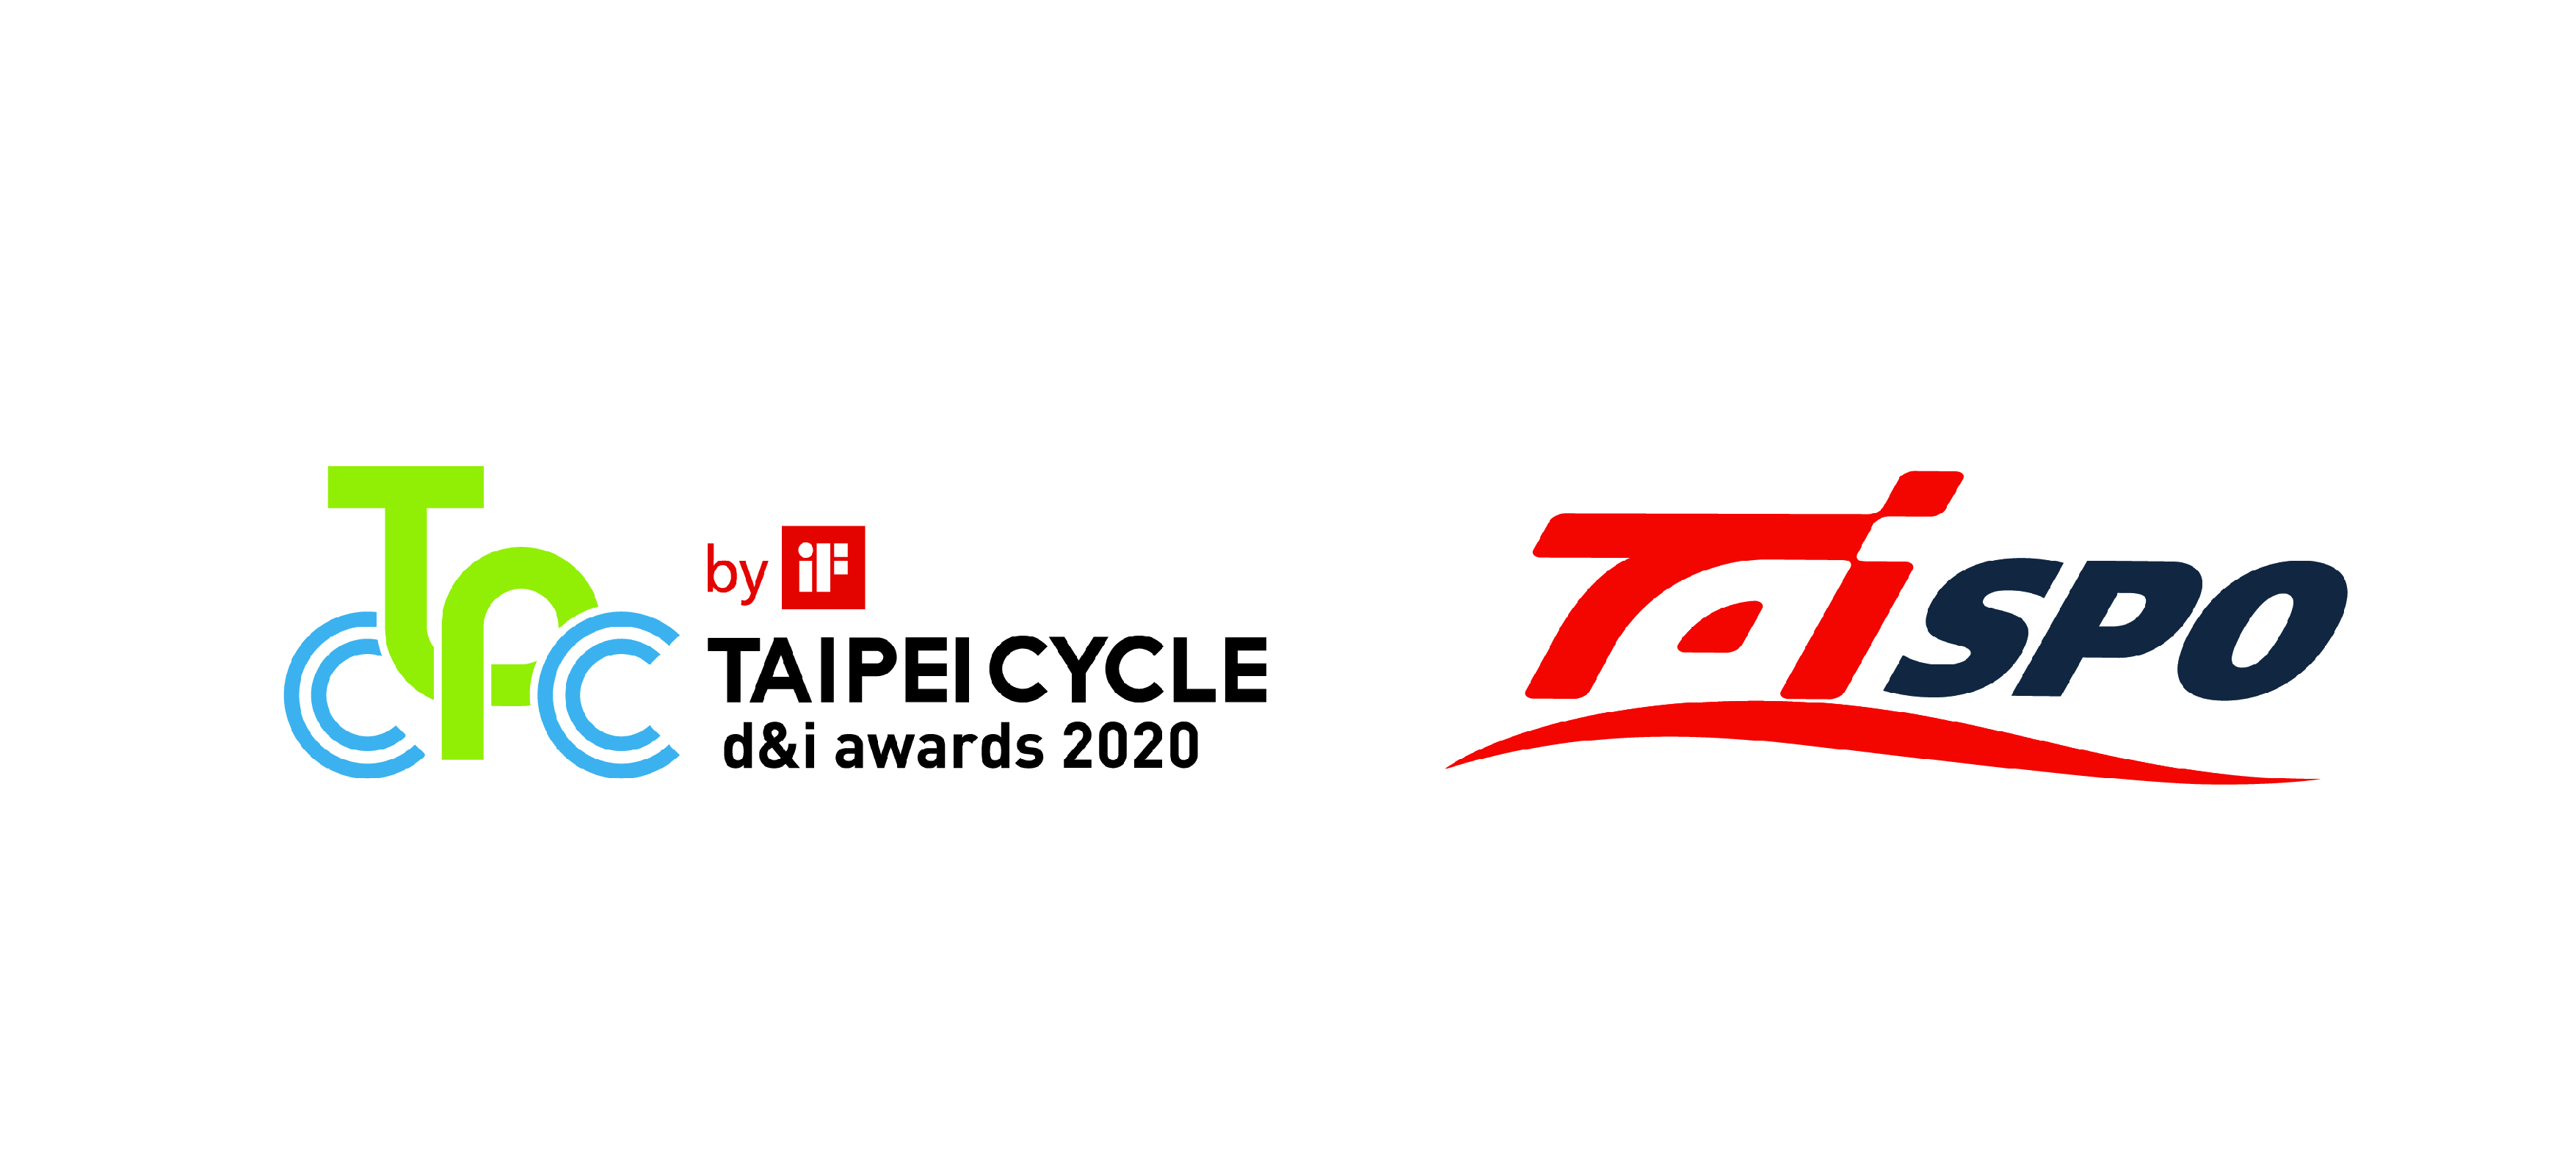 TAIPEI CYCLE d&i awards/TaiSPO Innovation Awards VR Pavilion